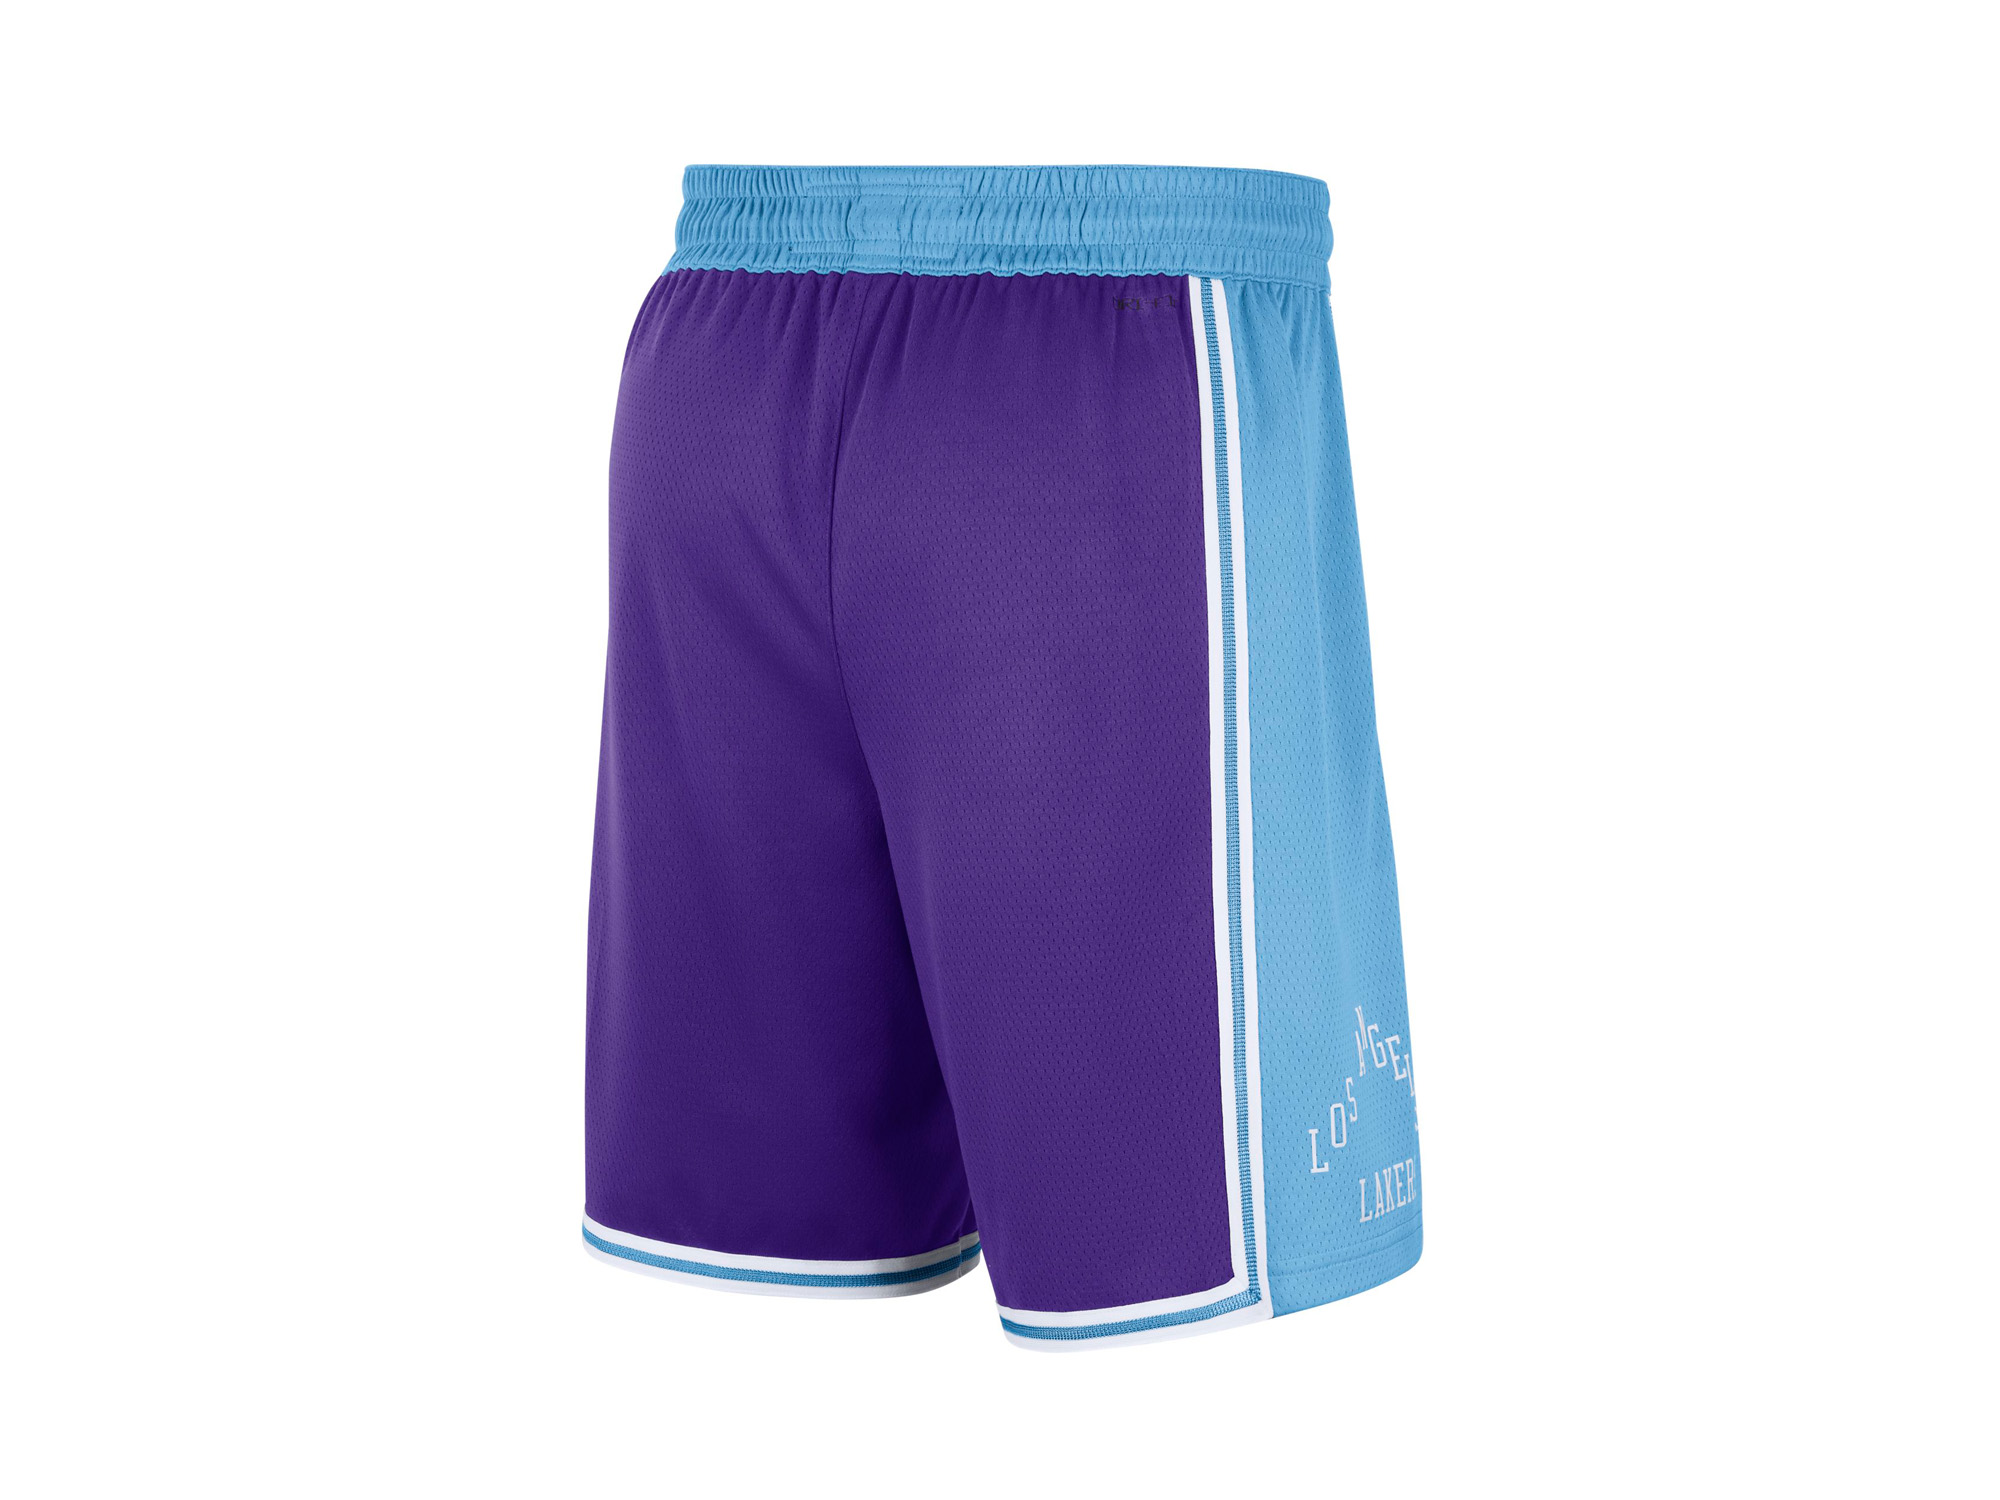 Nike Los Angeles Lakers NBA City Edition Swingman Shorts